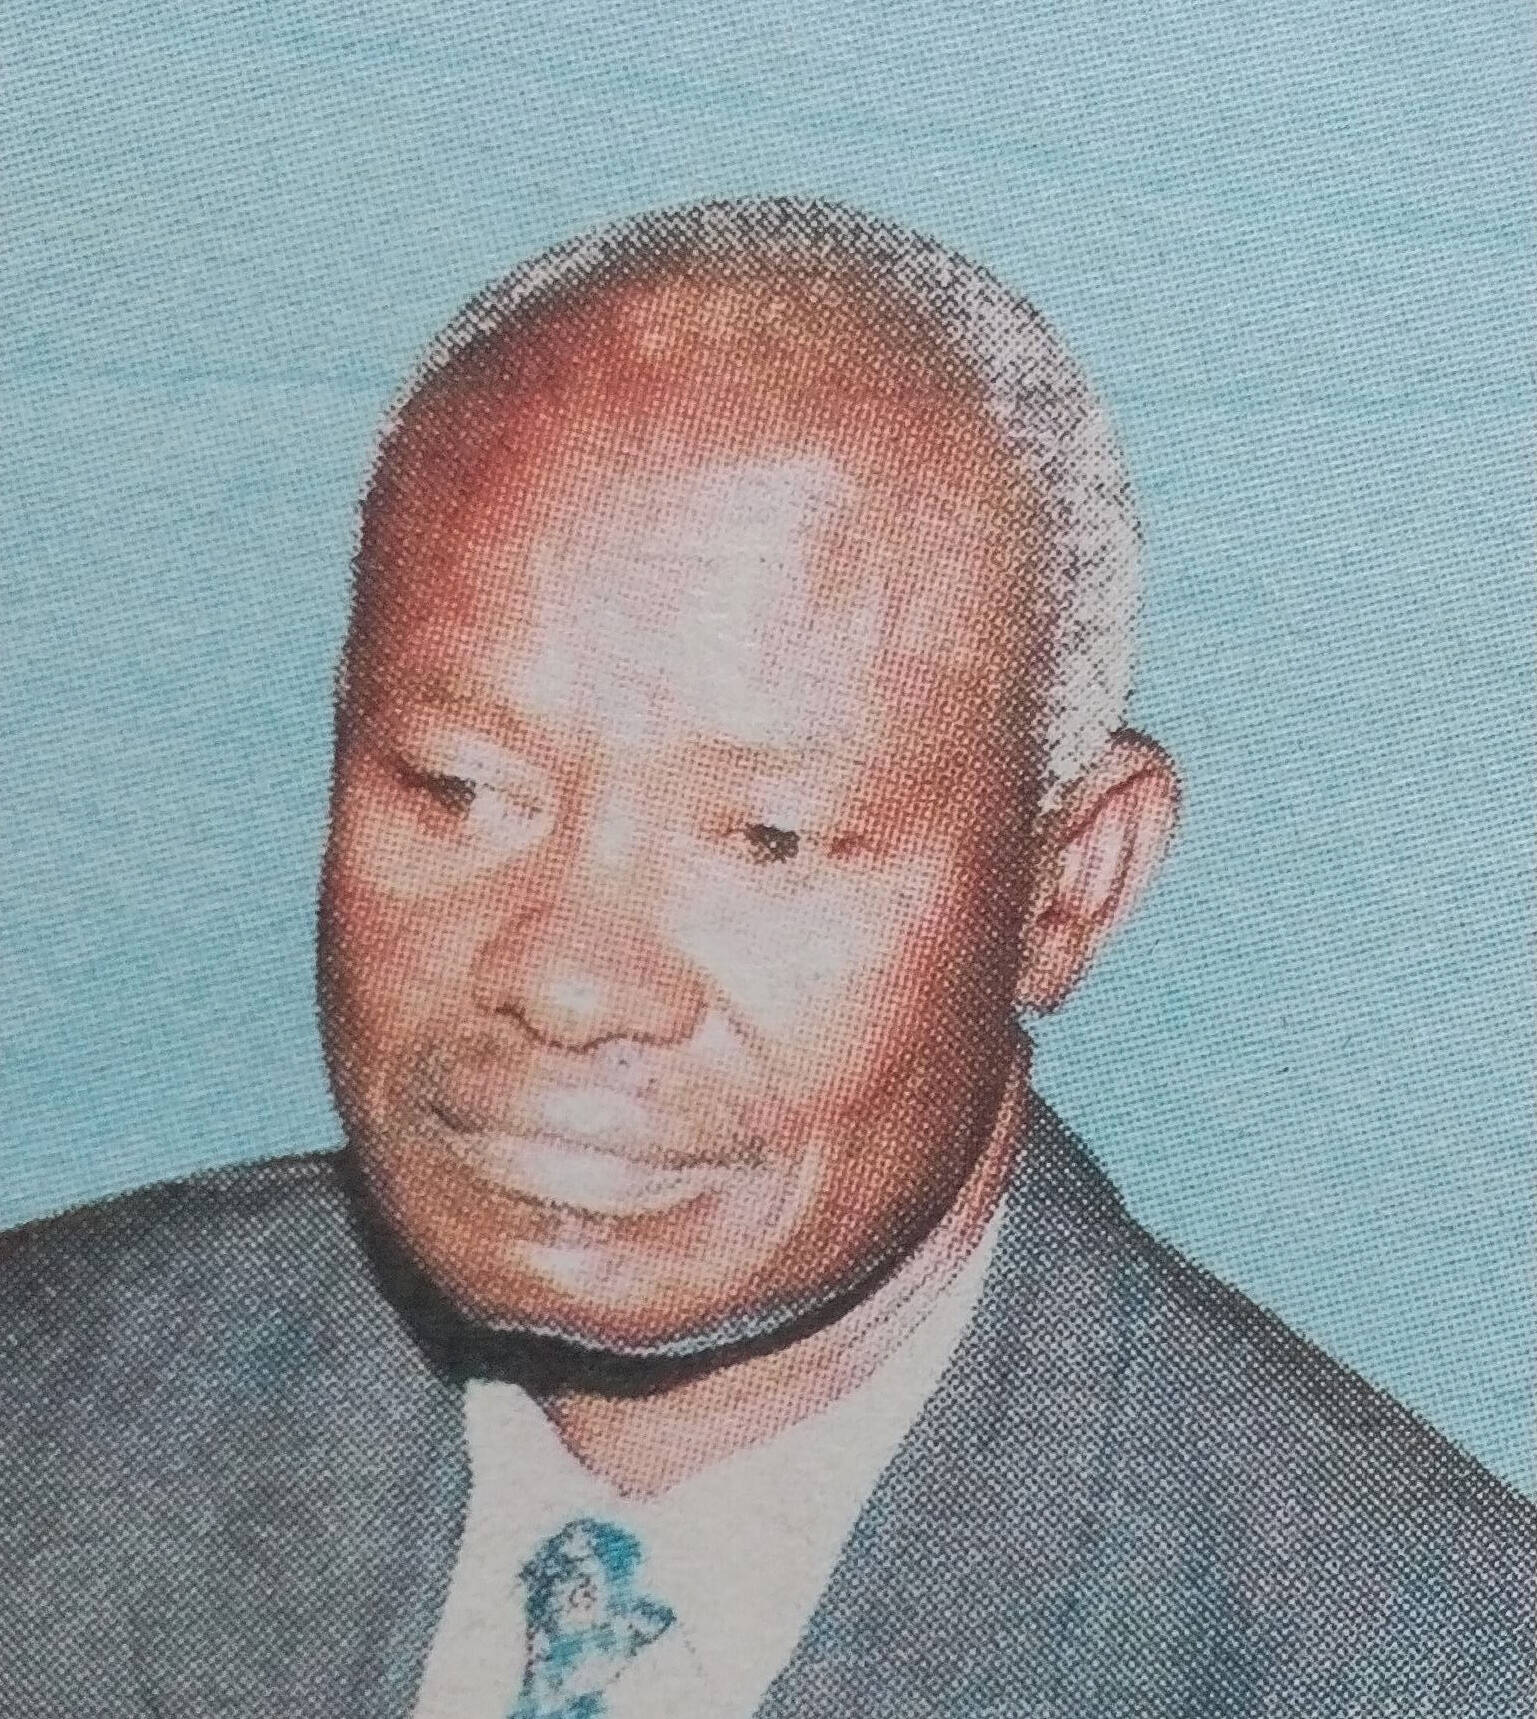 Obituary Image of Nicodemus Hongo Owuor 13 Aug 1944 -20 April 2017